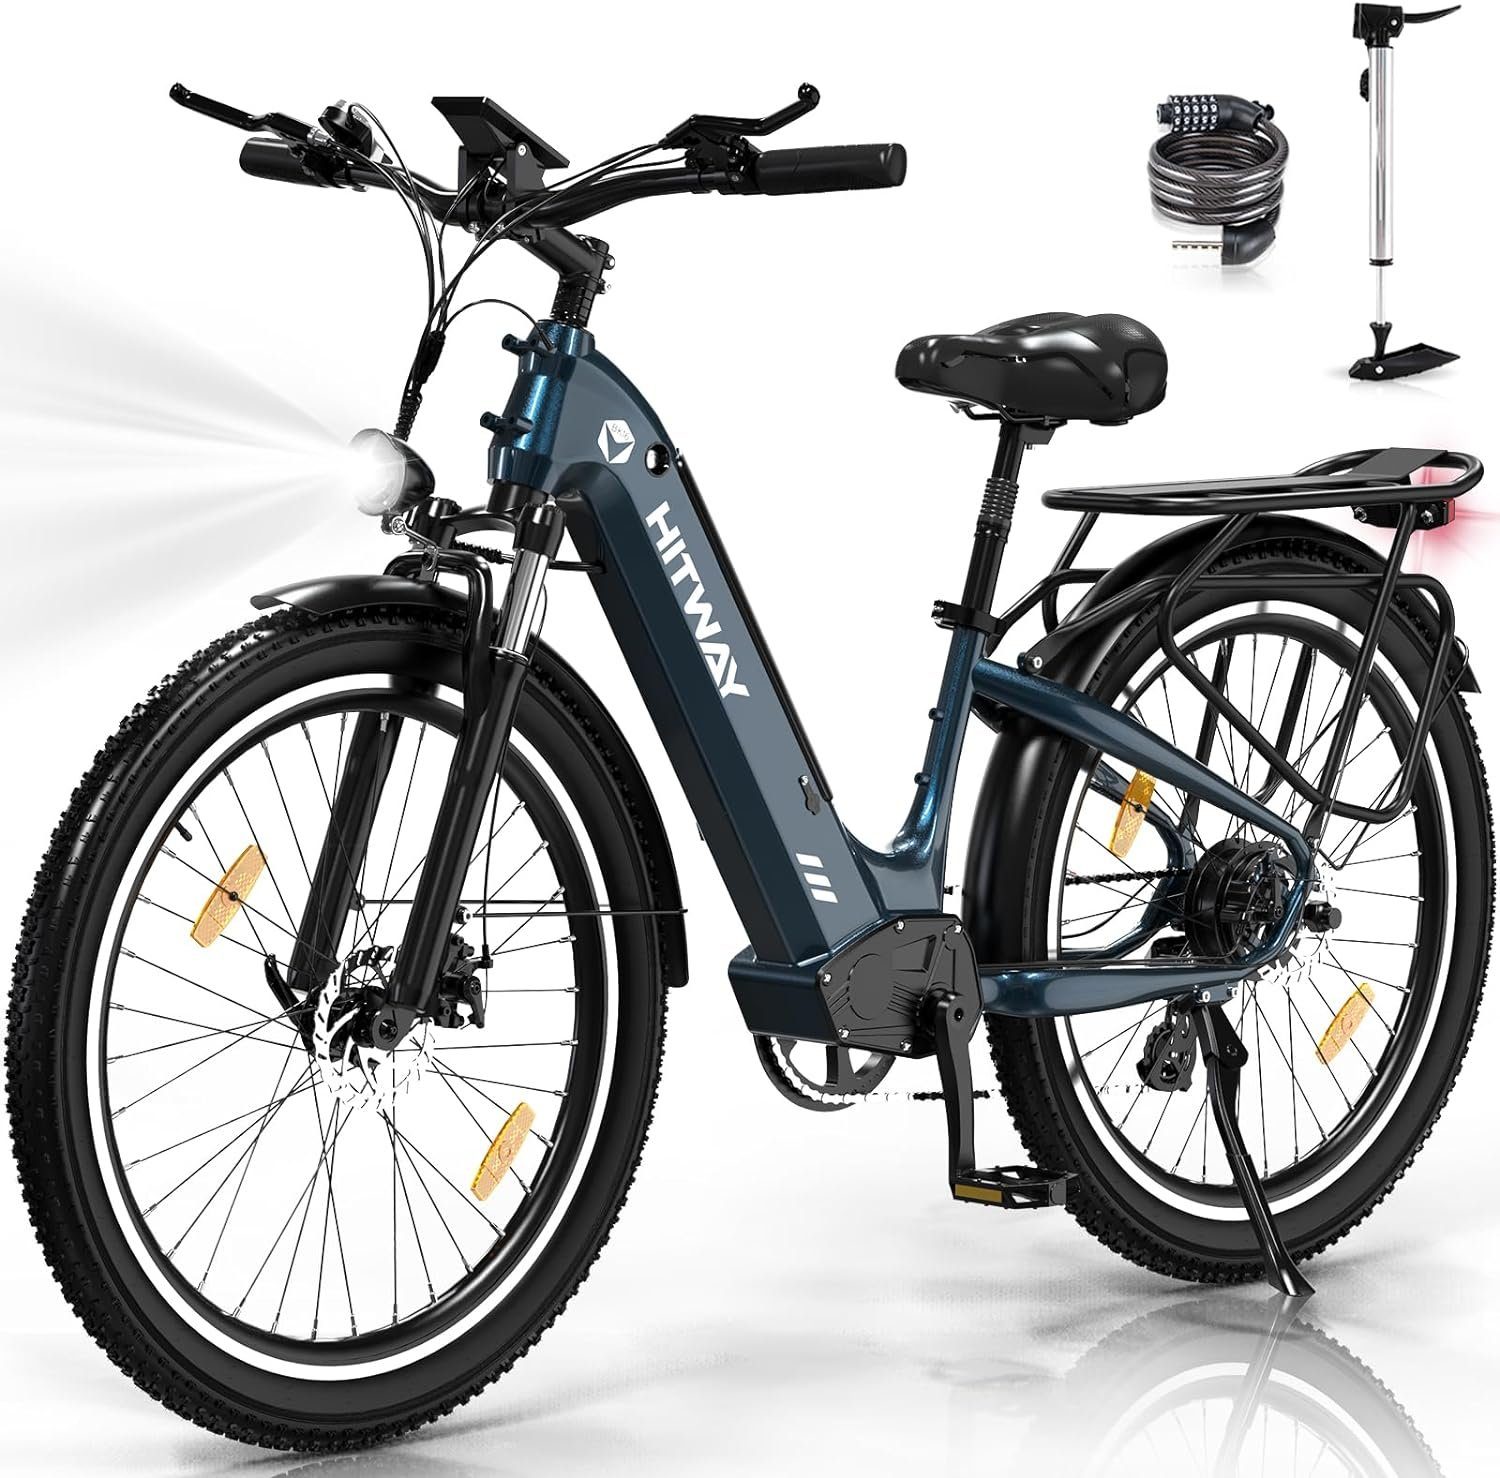 HITWAY E-Bike 26X3.0 Elektrofahrrad, E-Mountainbike 48V 18 Ah MTB max. 55–80 km, 7 Gang Shimano Altus Schaltwerk, Kettenschaltung, Mittelmotor, Ladegerät/ Pumpe/Fahrradschloss/für Damen und Herren 170 - 190 cm blau